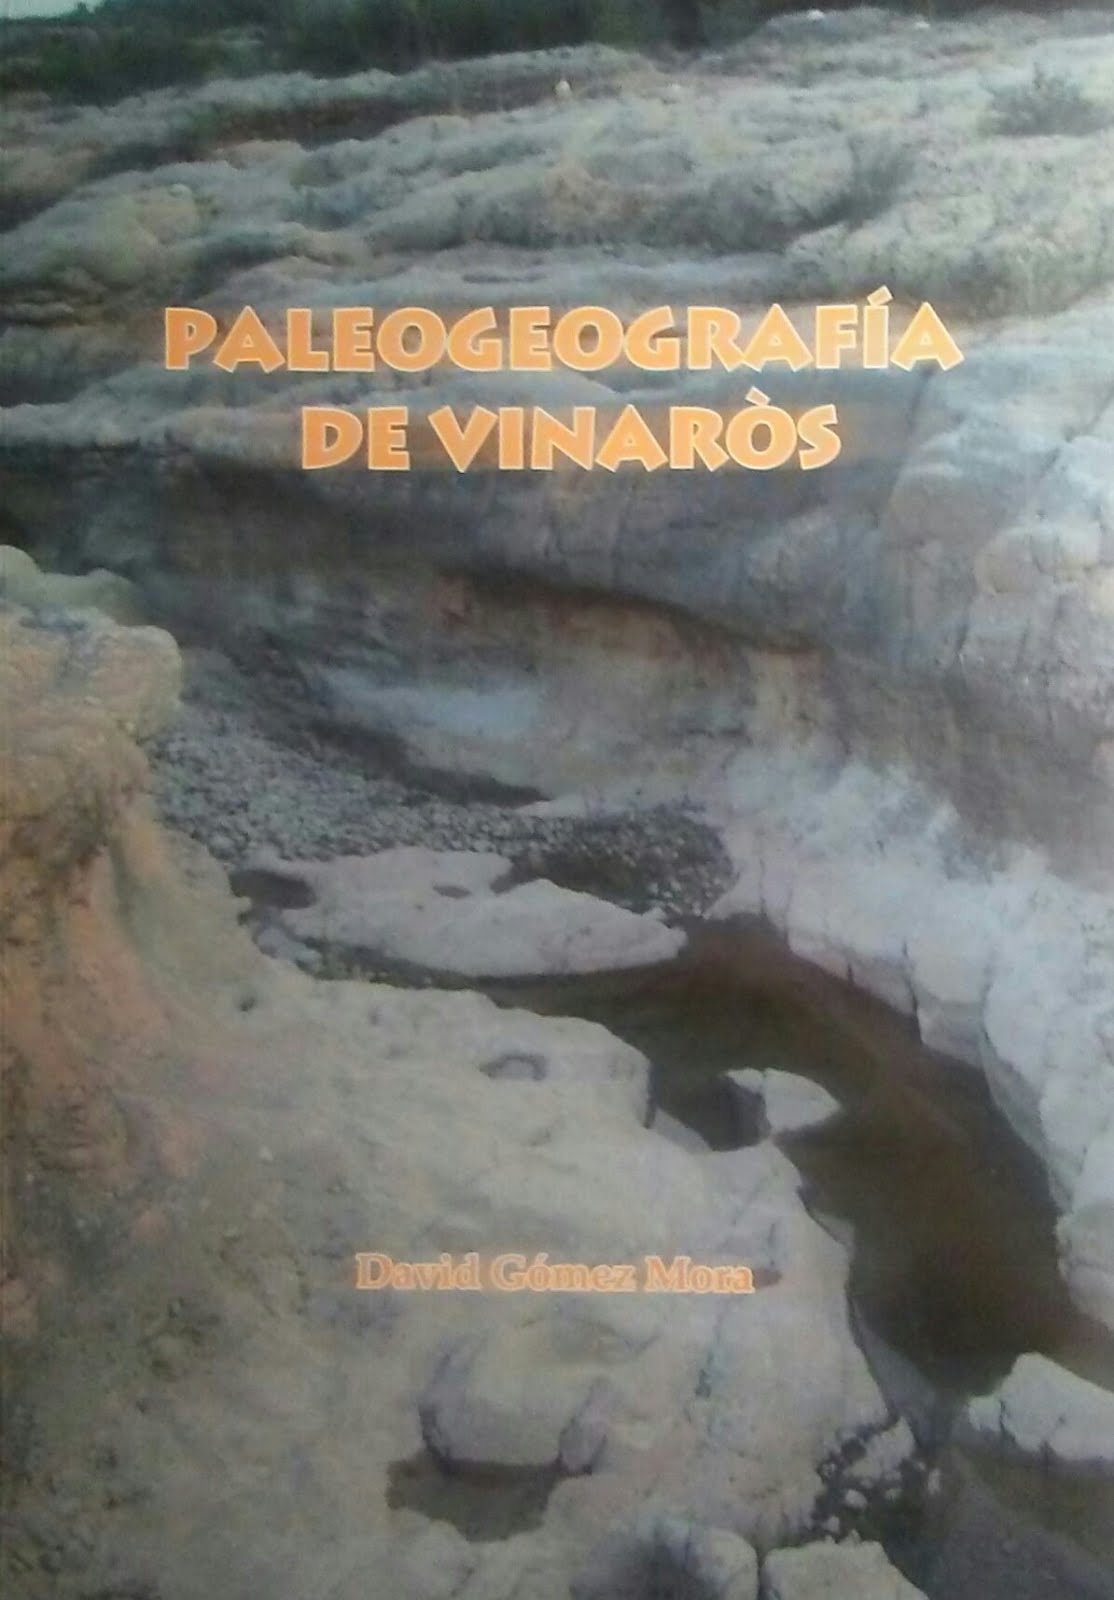 Paleogeografía de Vinaròs (2007)